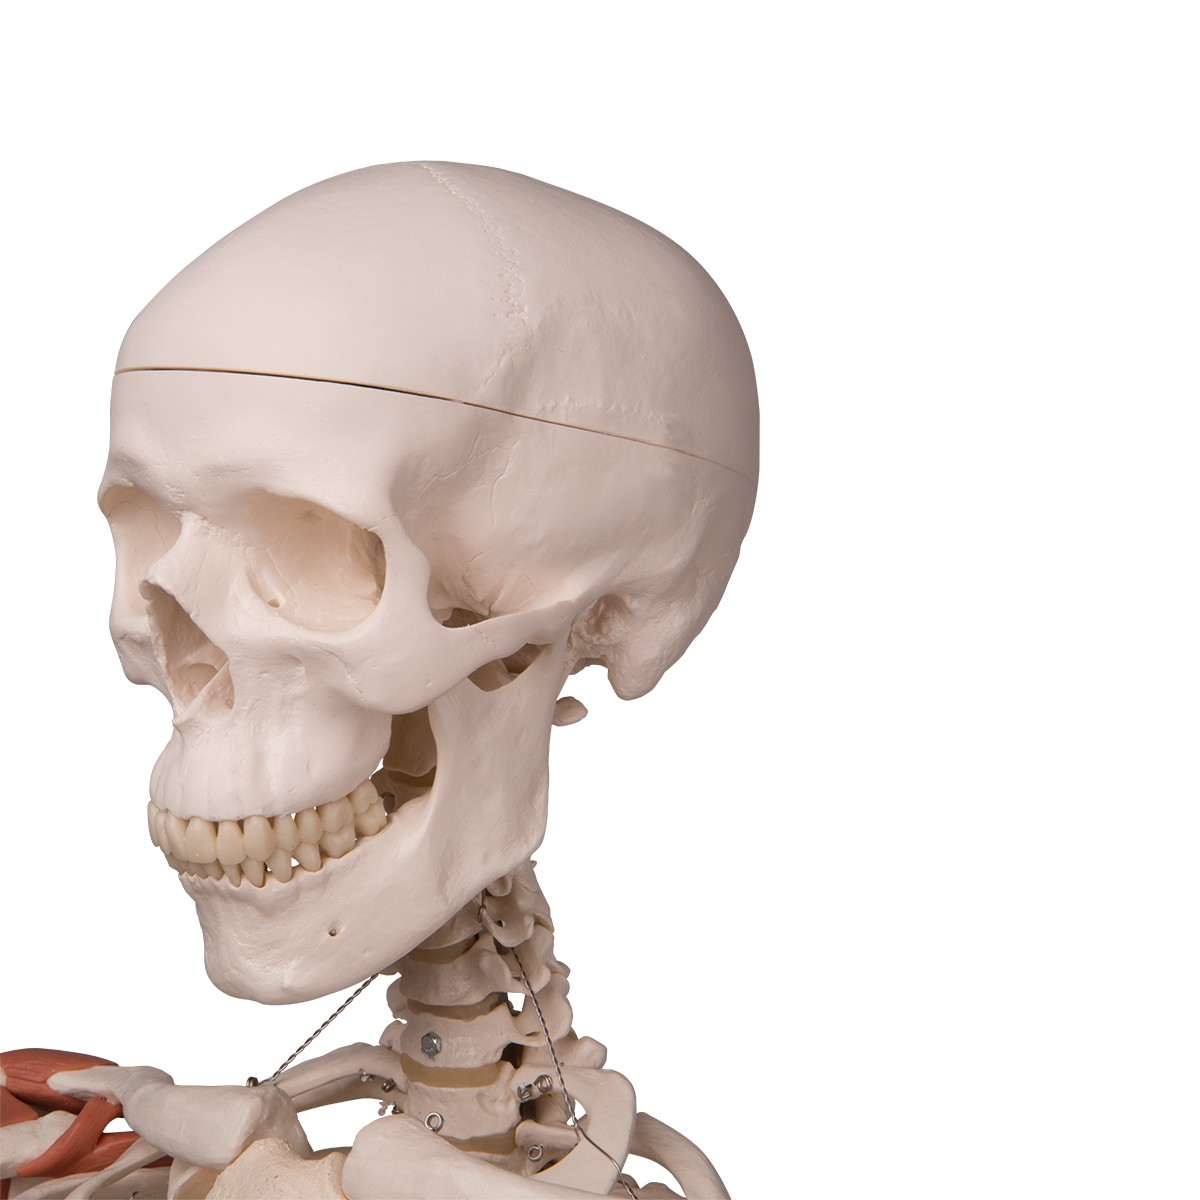 Skelett Modell Leo mit Gelenkbändern, auf 5-Fuß-Rollenstativ